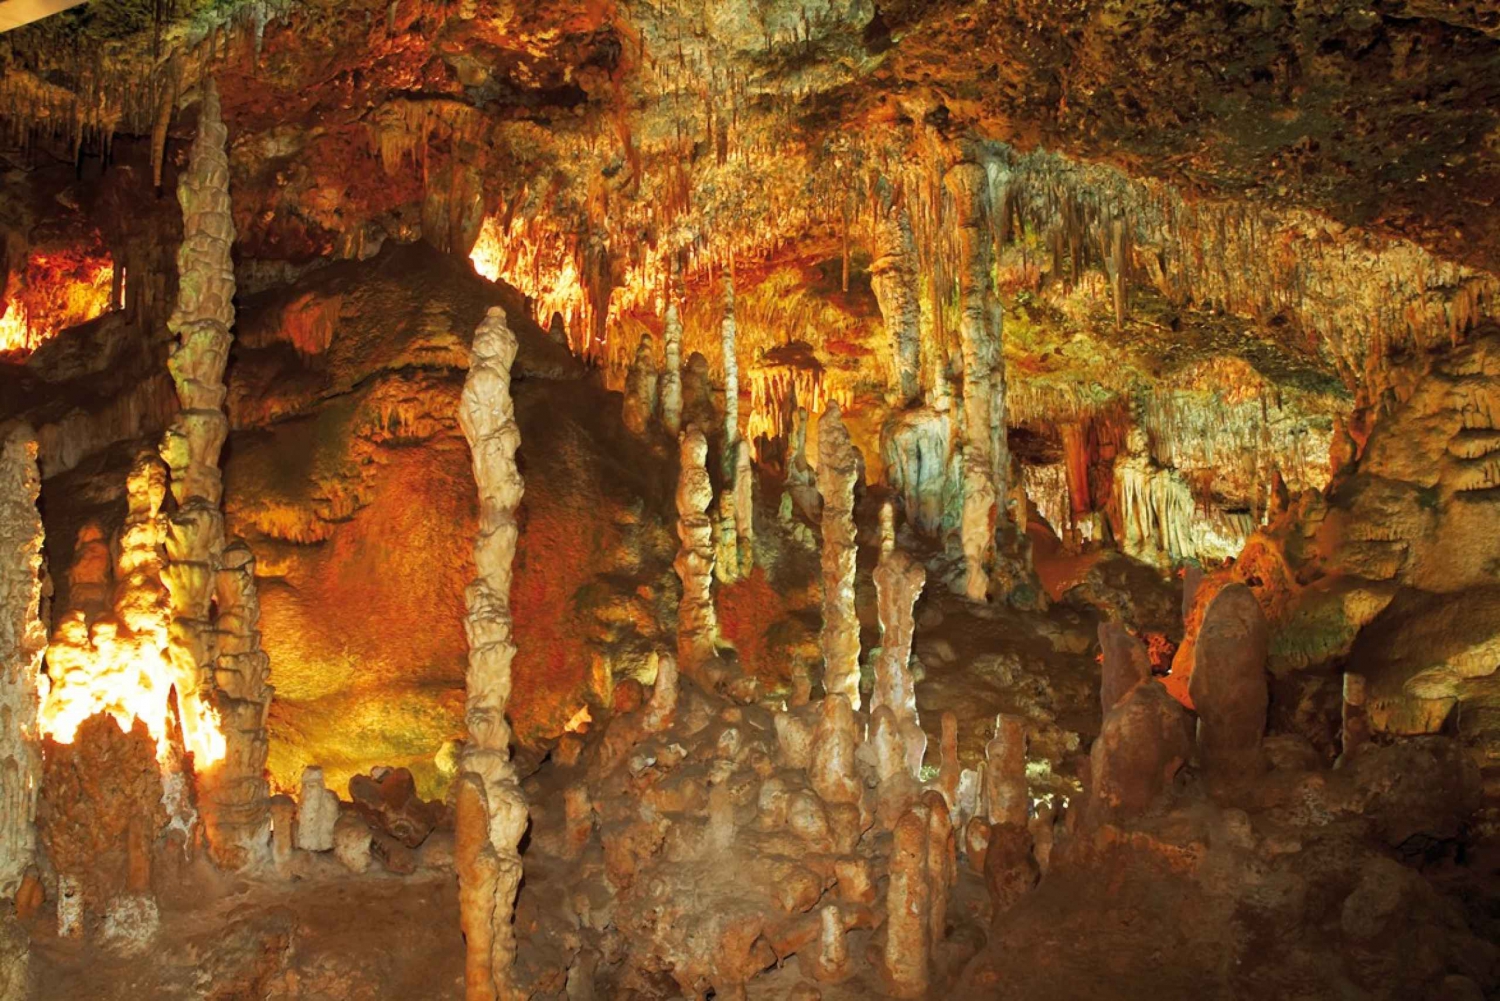 Mallorca: Caves of Hams, Blue Cave and audiovisual